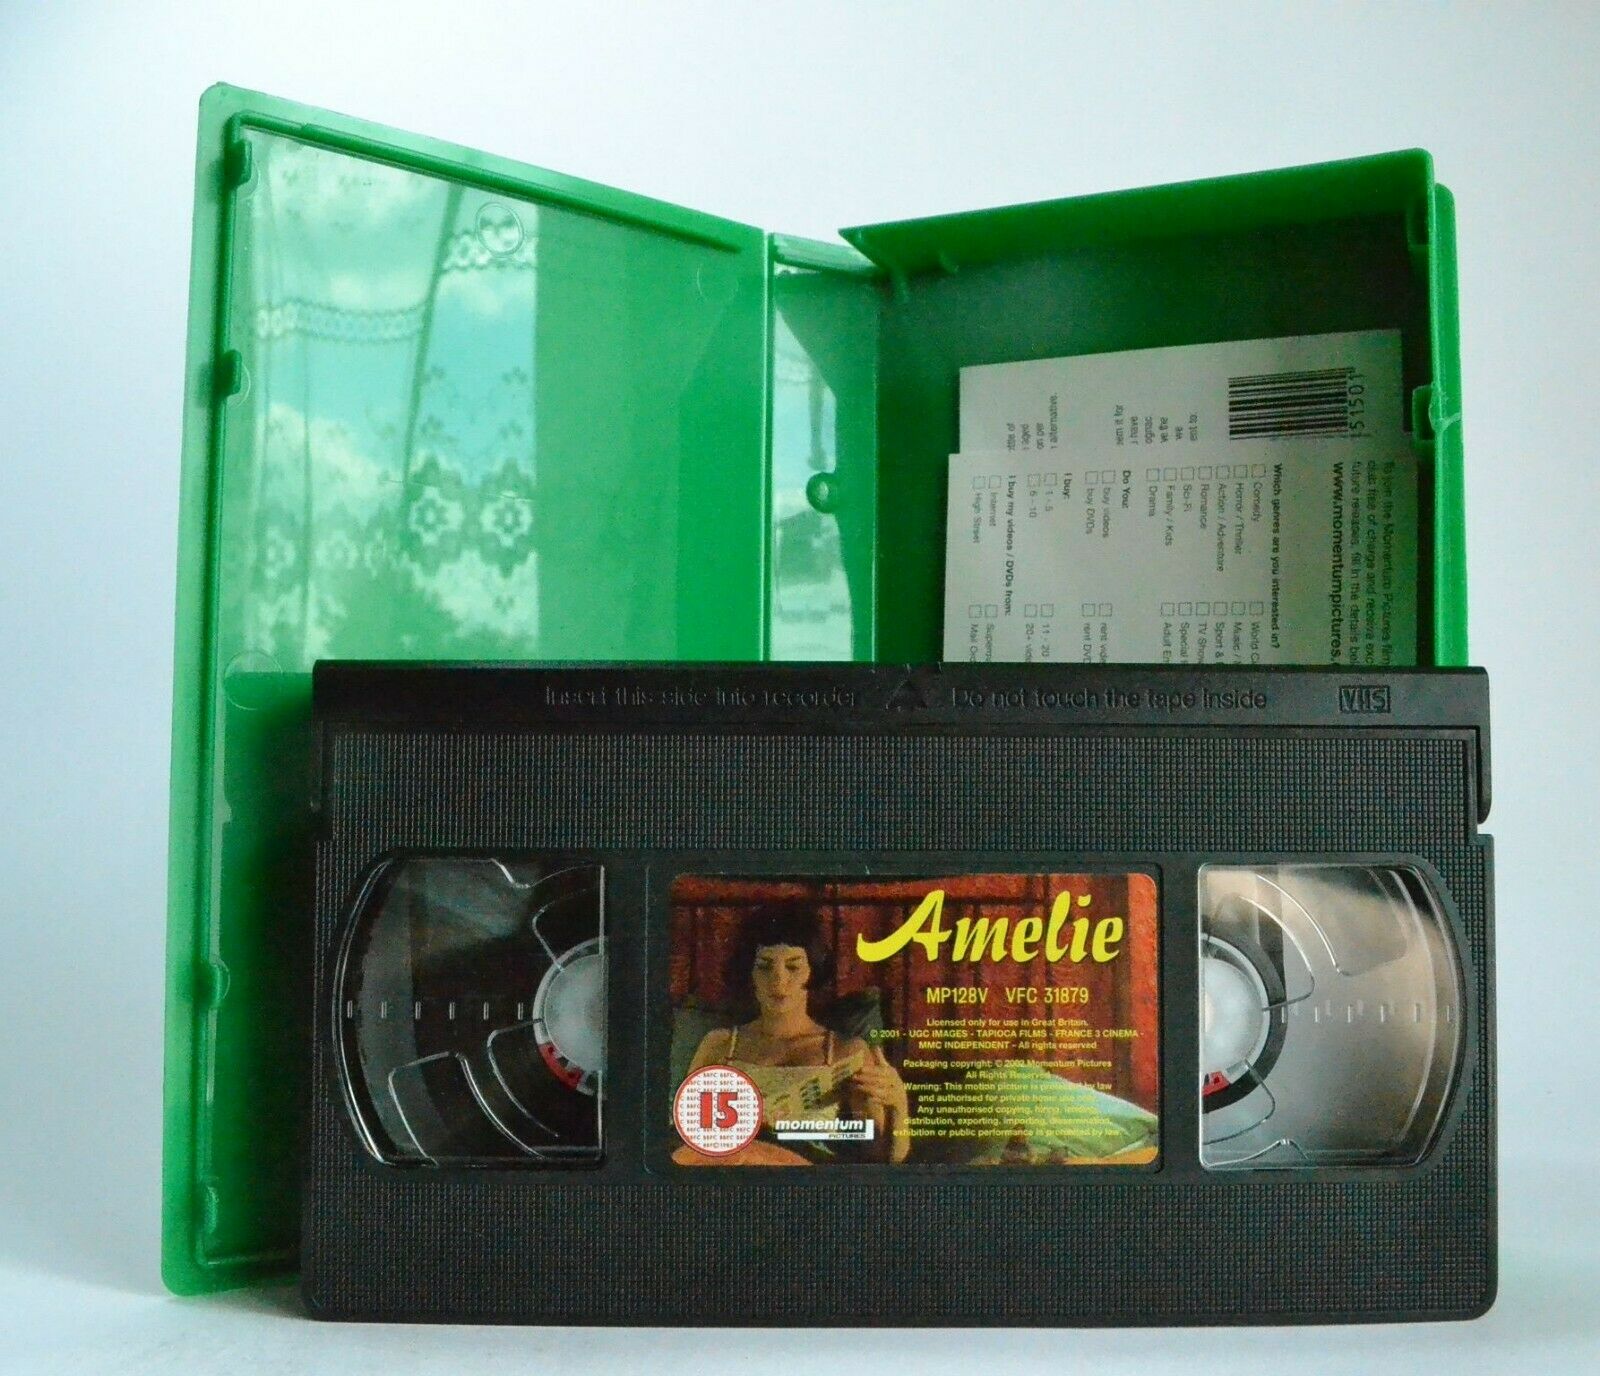 Amelie: A Film By Jean-Pierre Jeunet (2001) - Audrey Tautou/Serge Merlin - VHS-